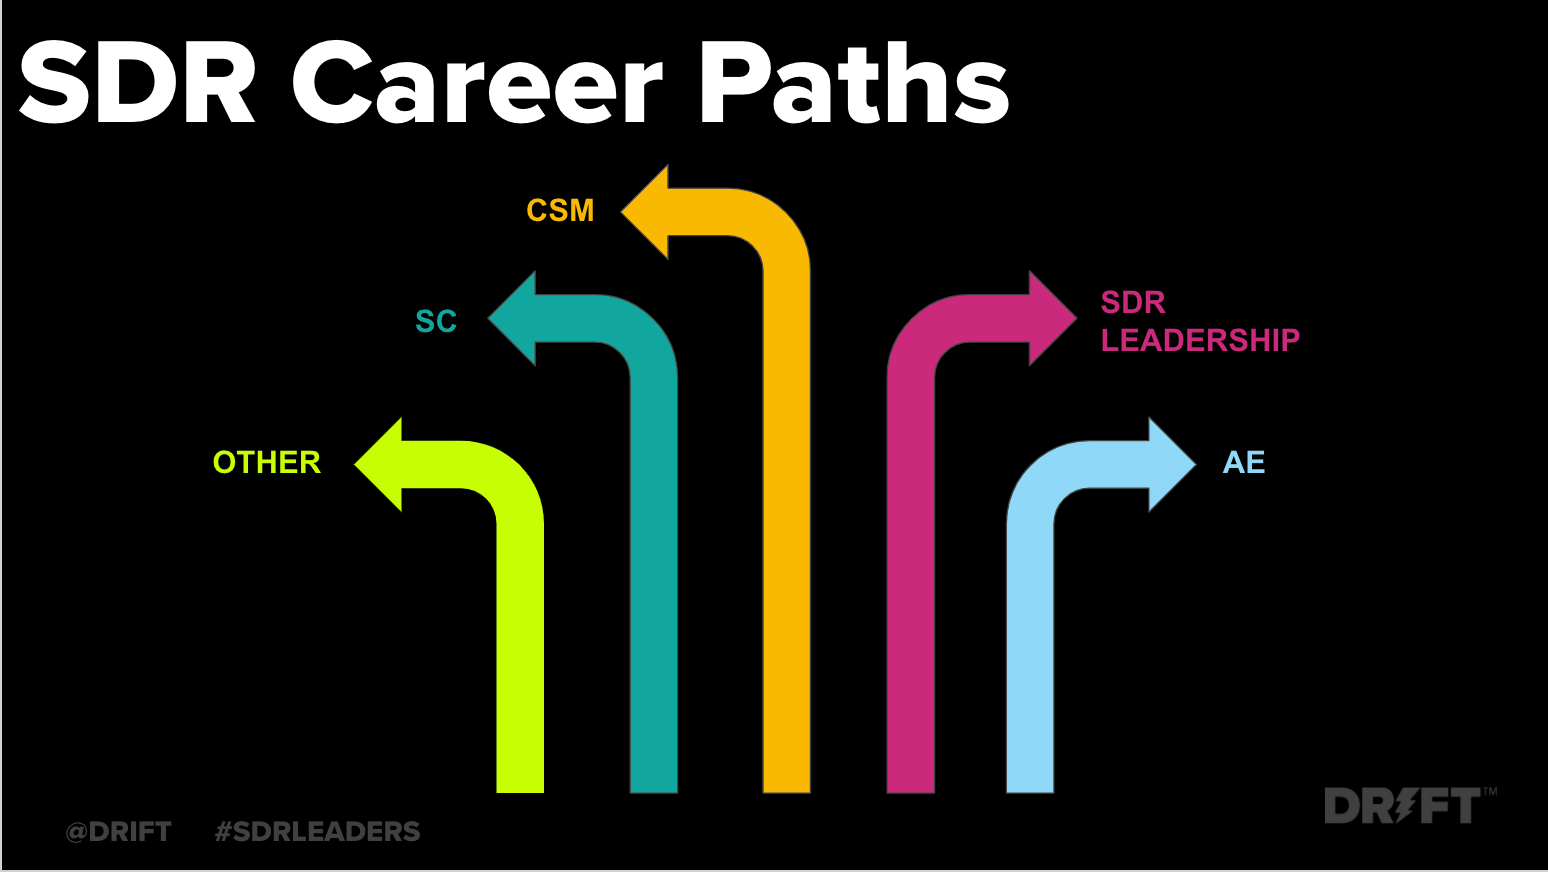 SDR Career Paths